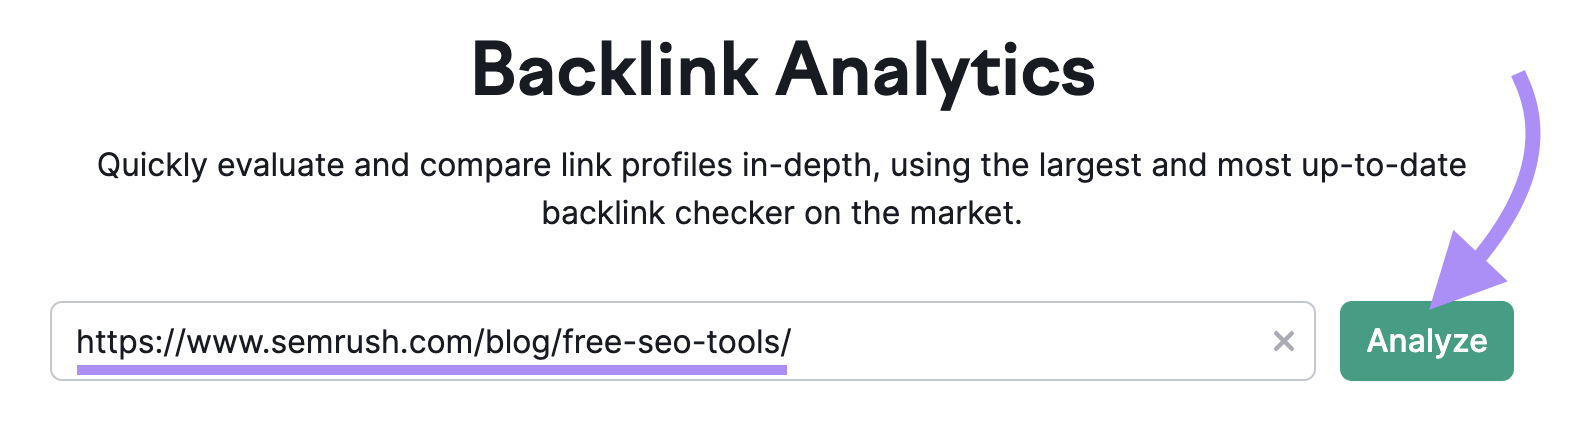 Semrush's blog URL entered into the Backlink Analytics search bar